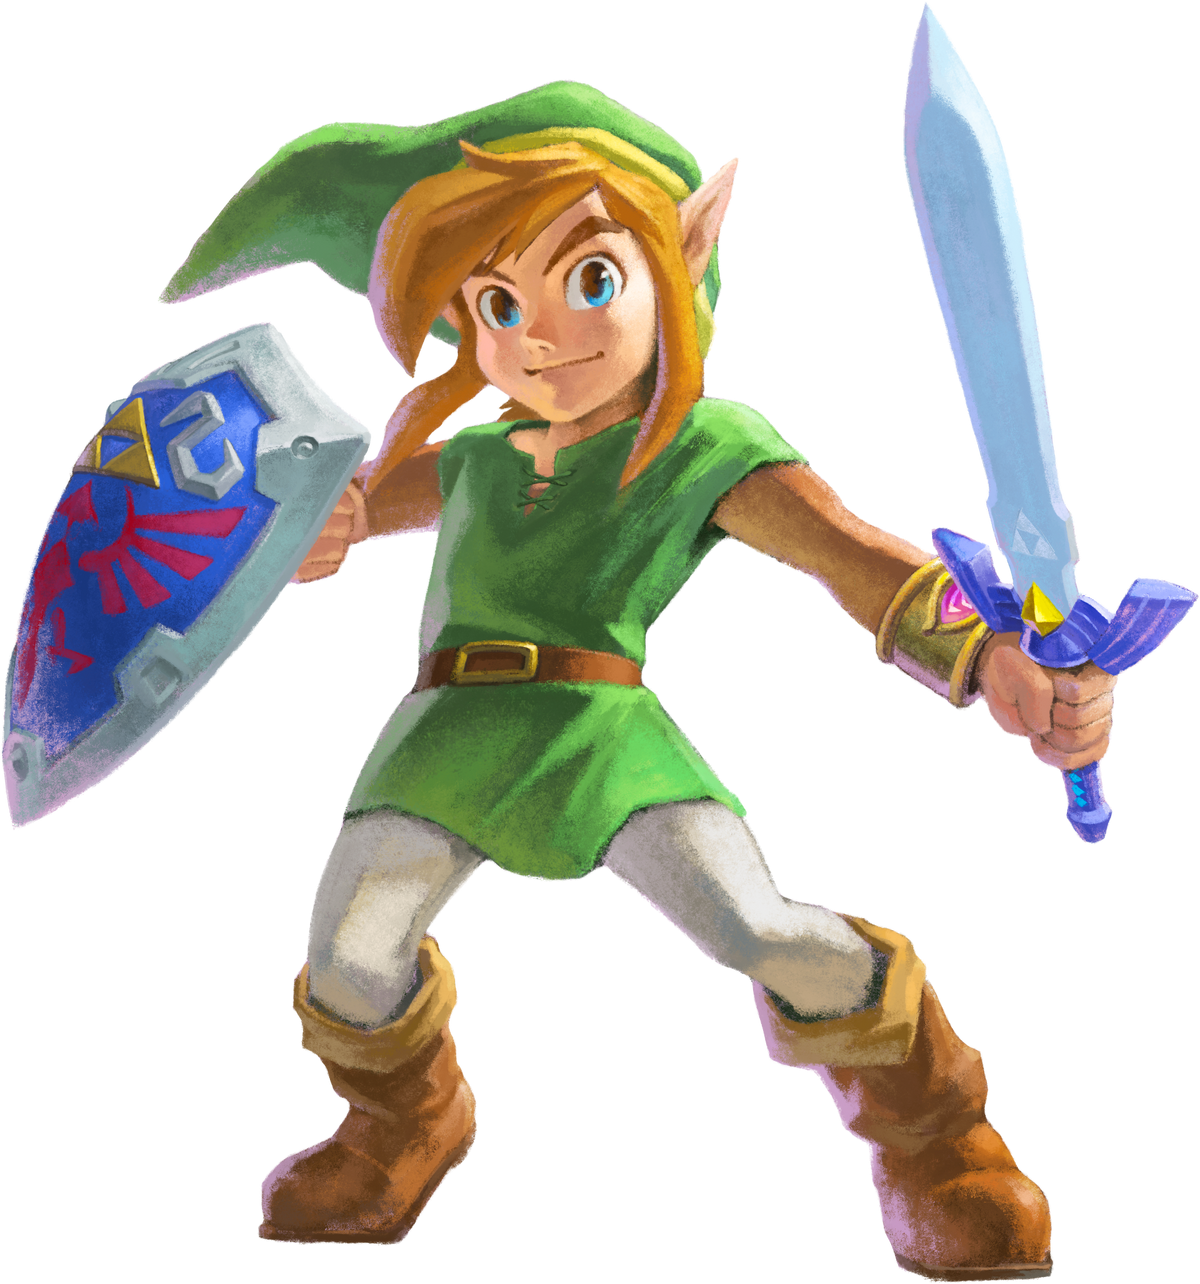 Линк Зельда. The Legend of Zelda link. Линк Зельда Нинтендо. Legend of Zelda линк PNG. Their link link